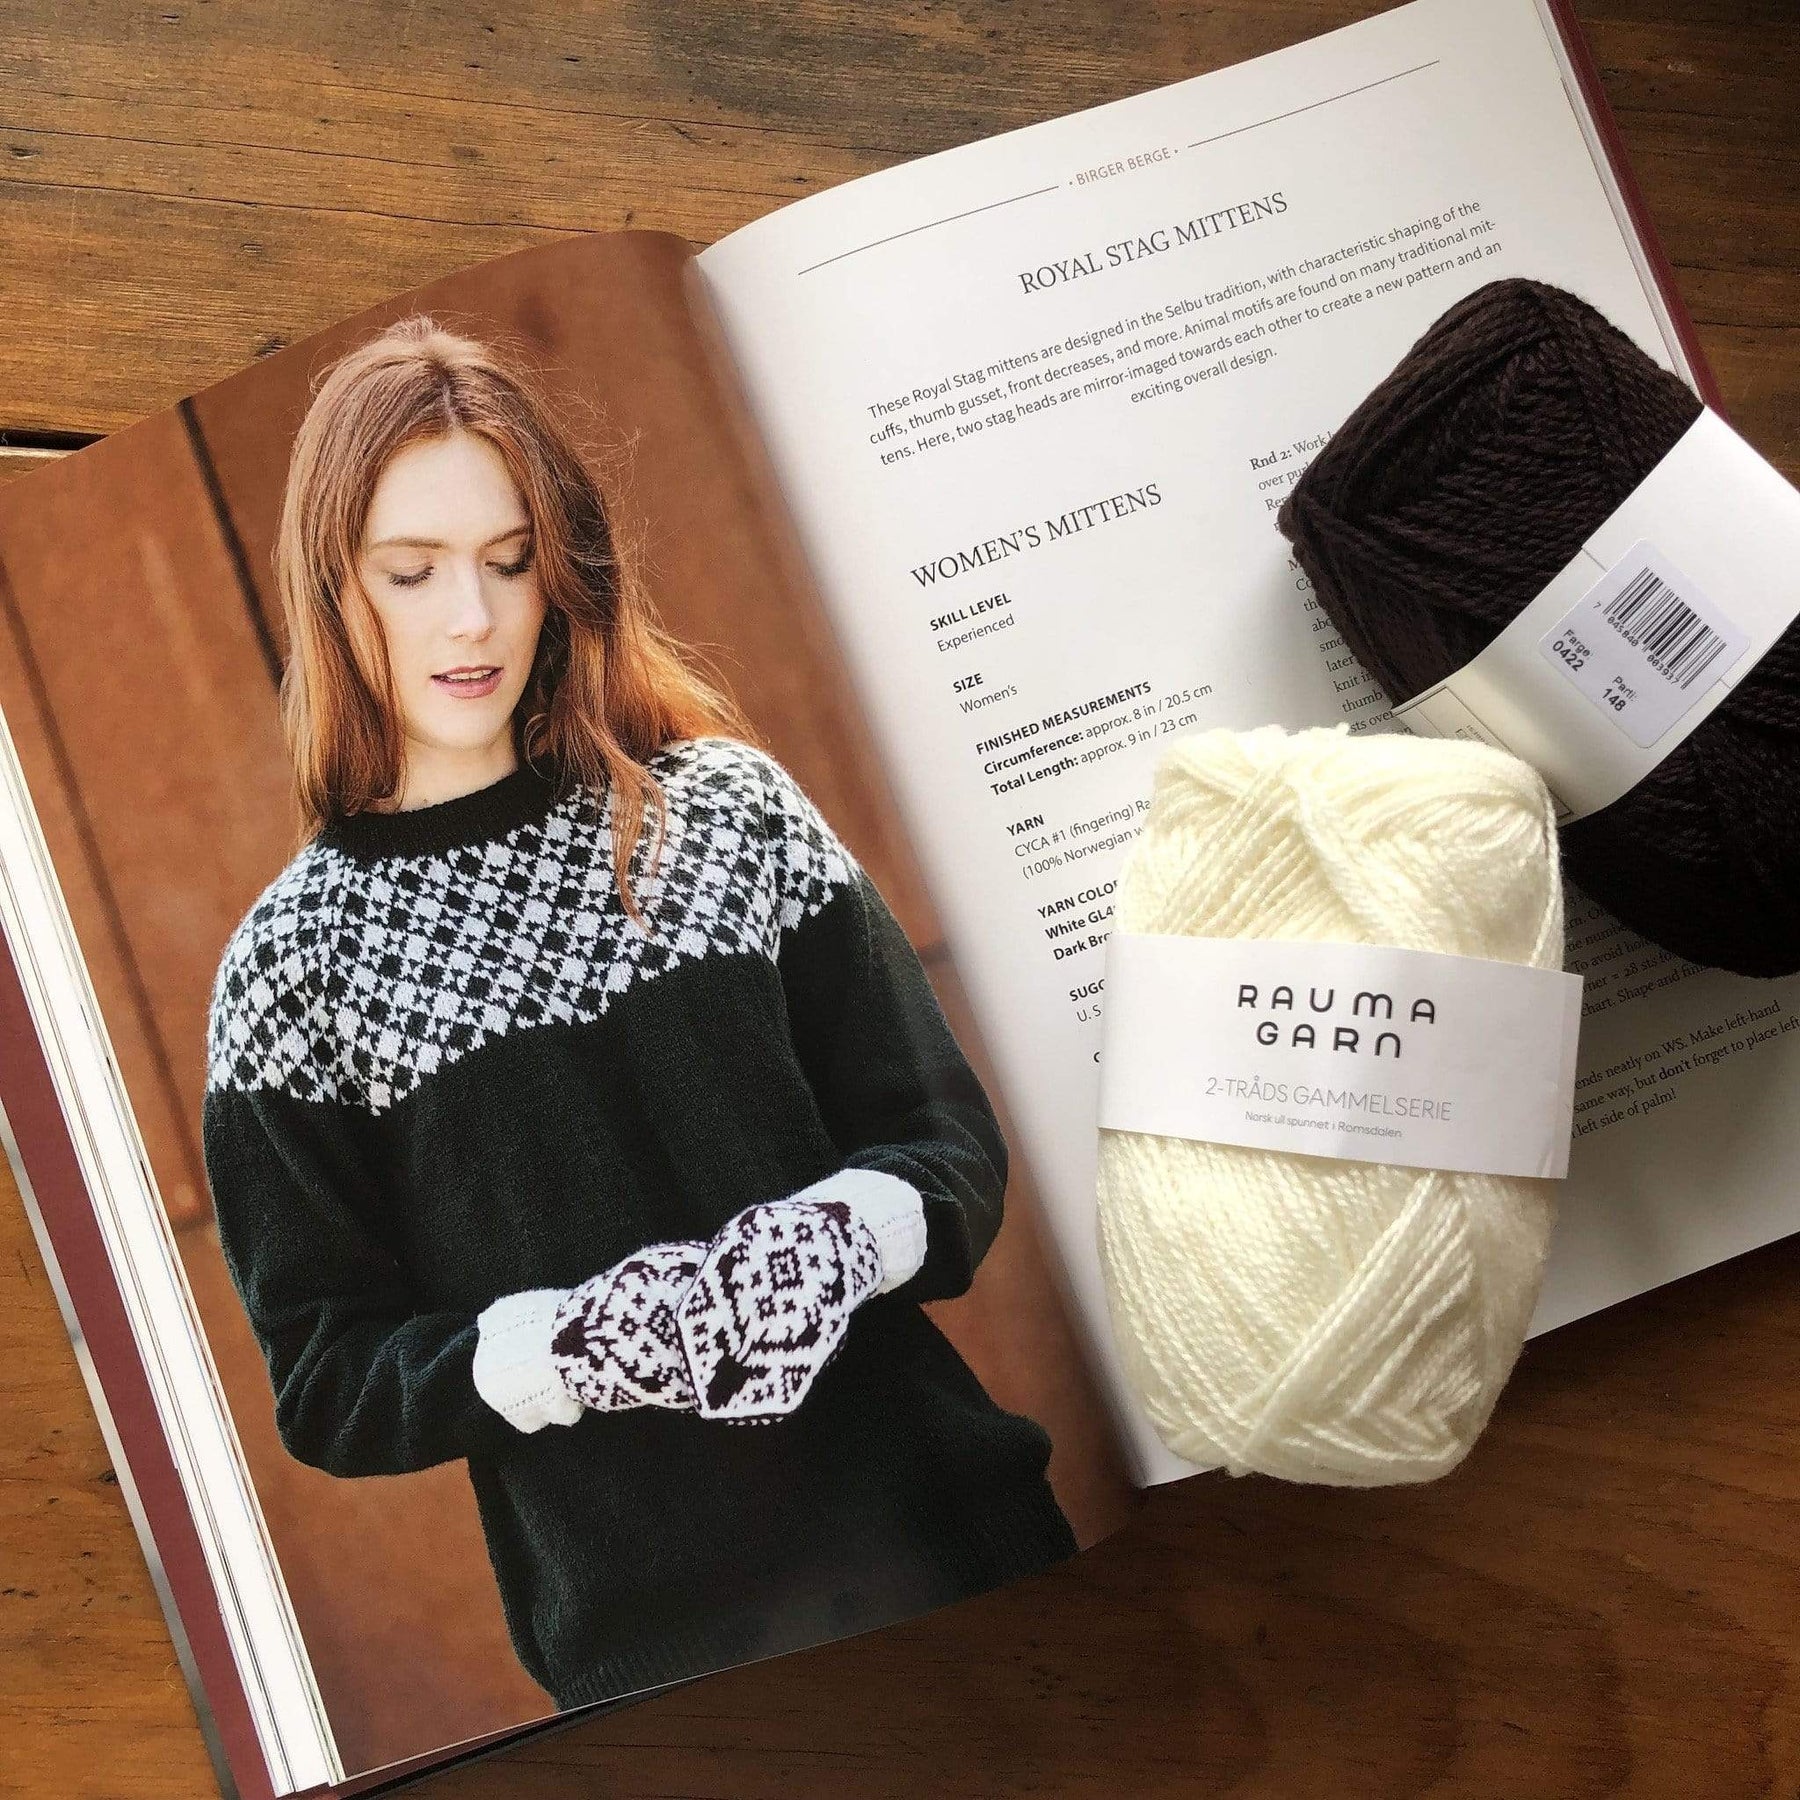 Knit Like a Norwegian: 30 Stunning Patterns from Scandinavia's Top Designers [Book]